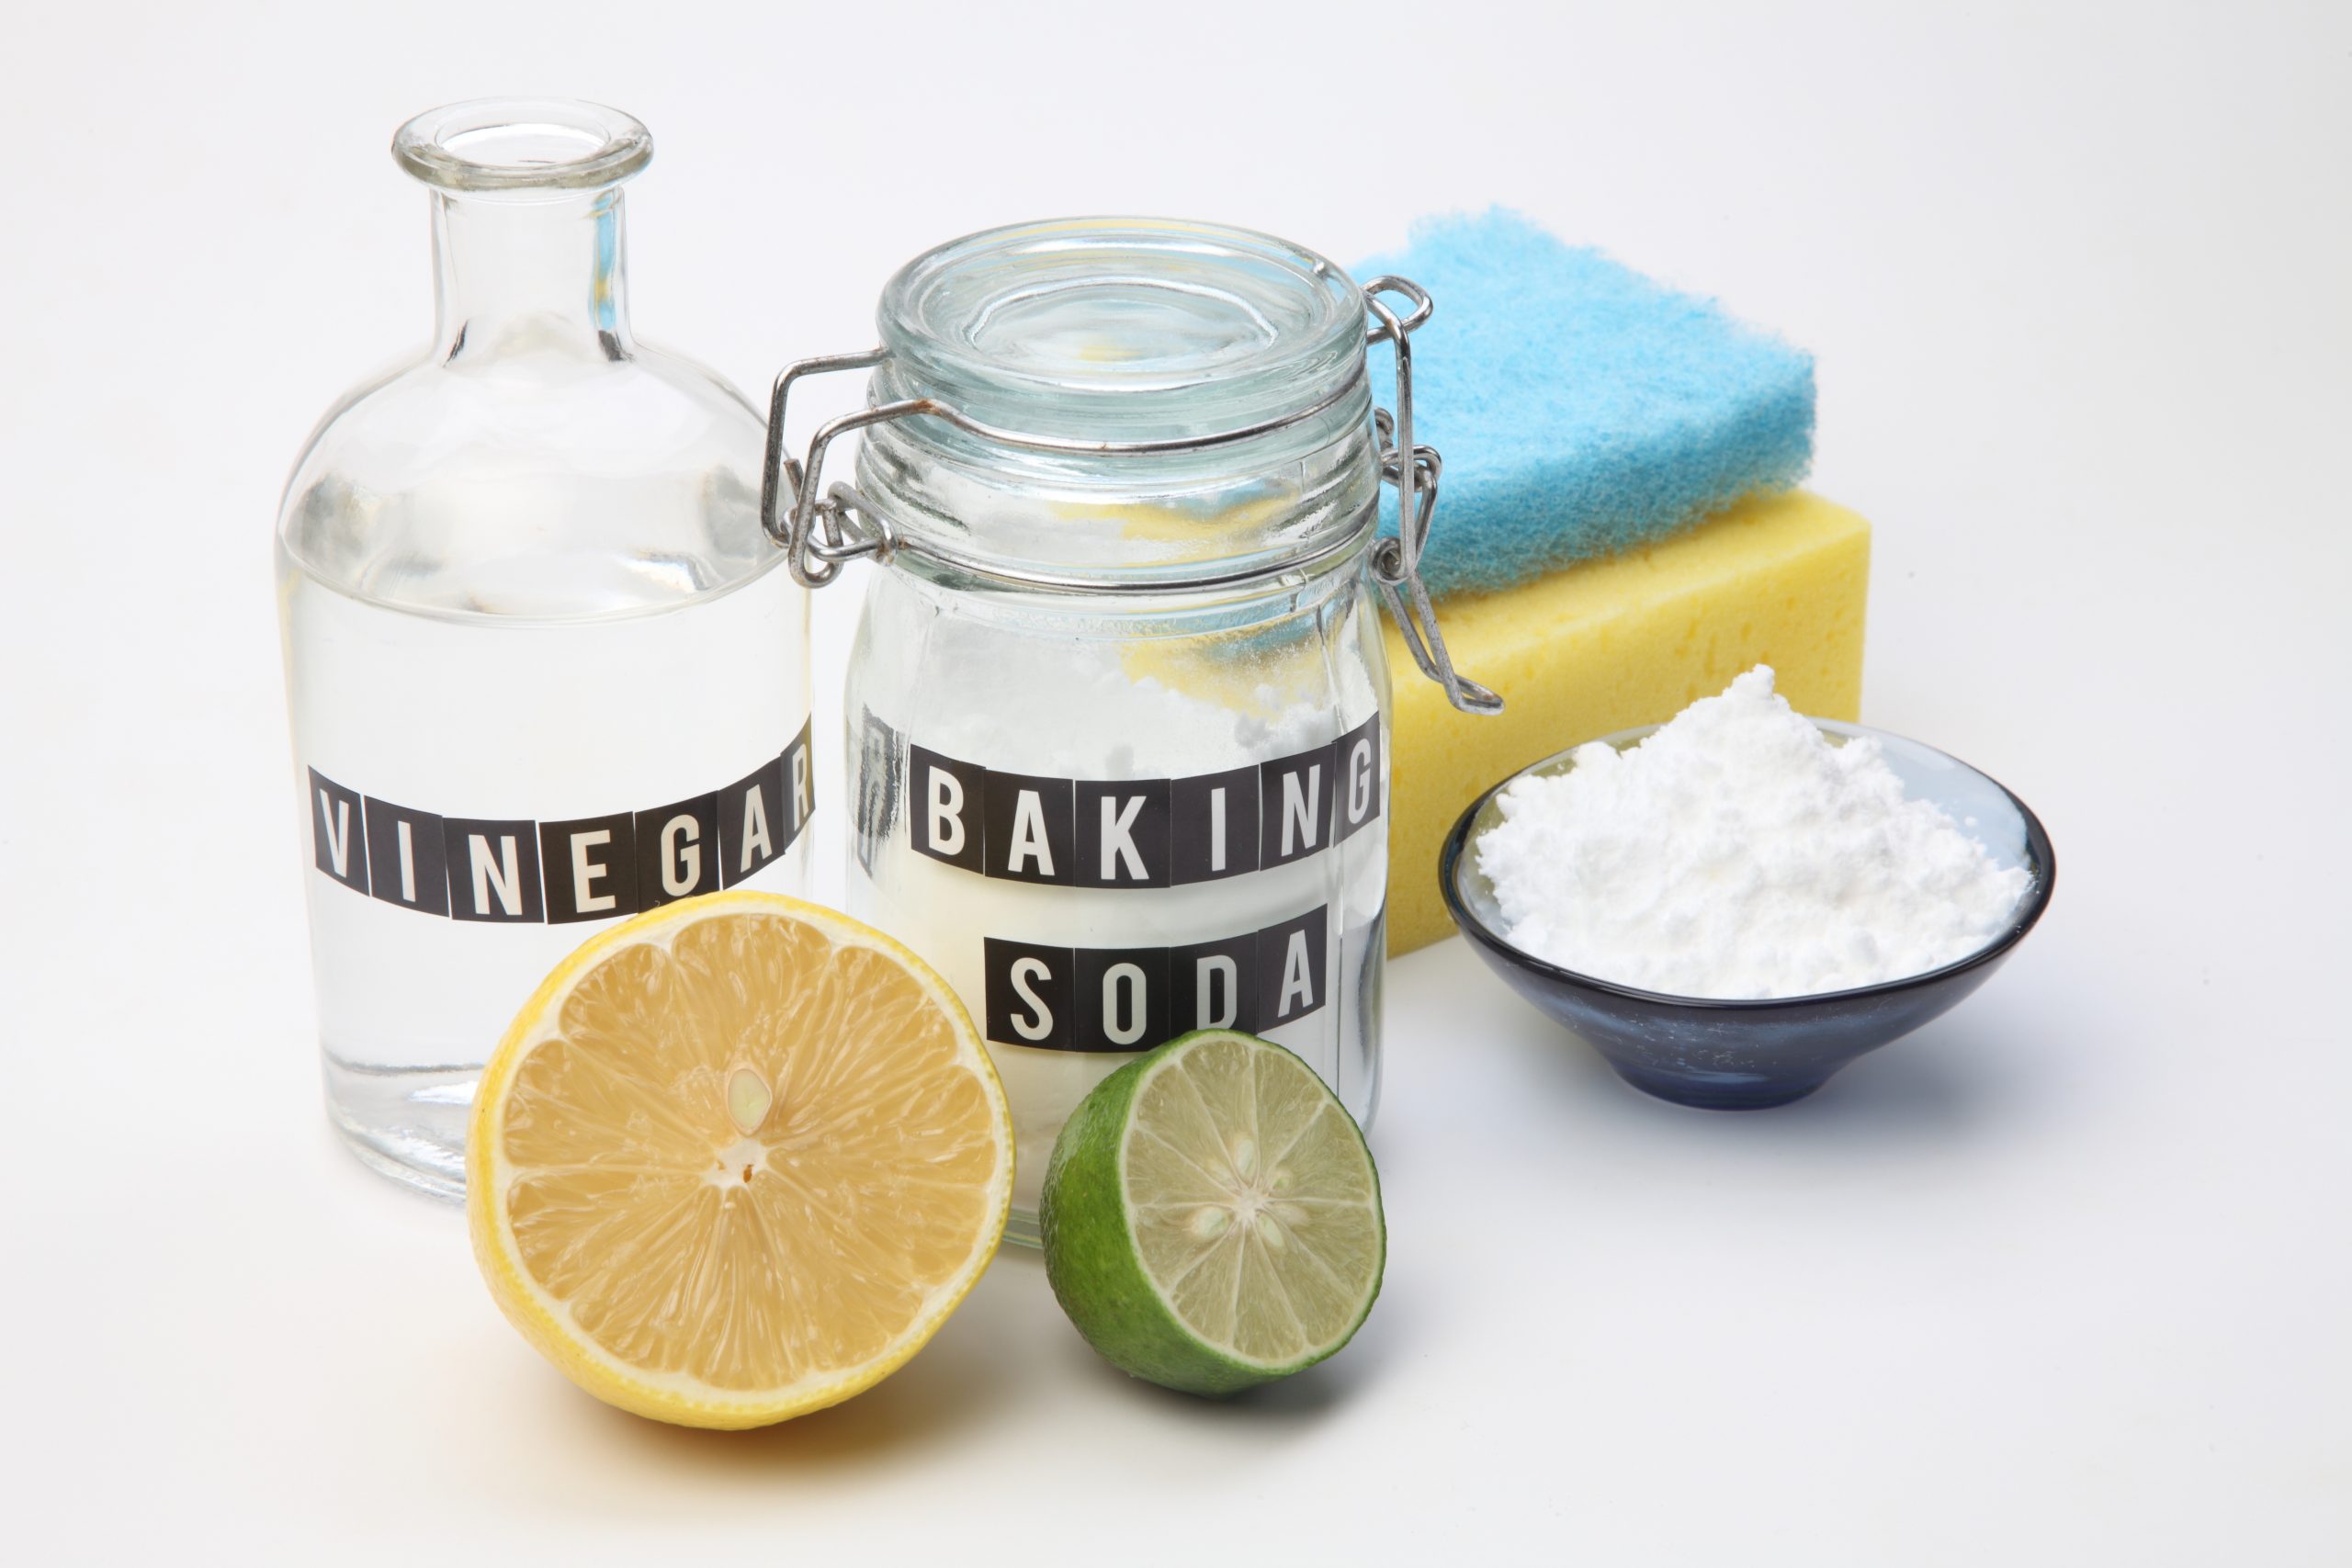 Sodium Bicarbonate (Baking Soda) - Chemical Safety Facts